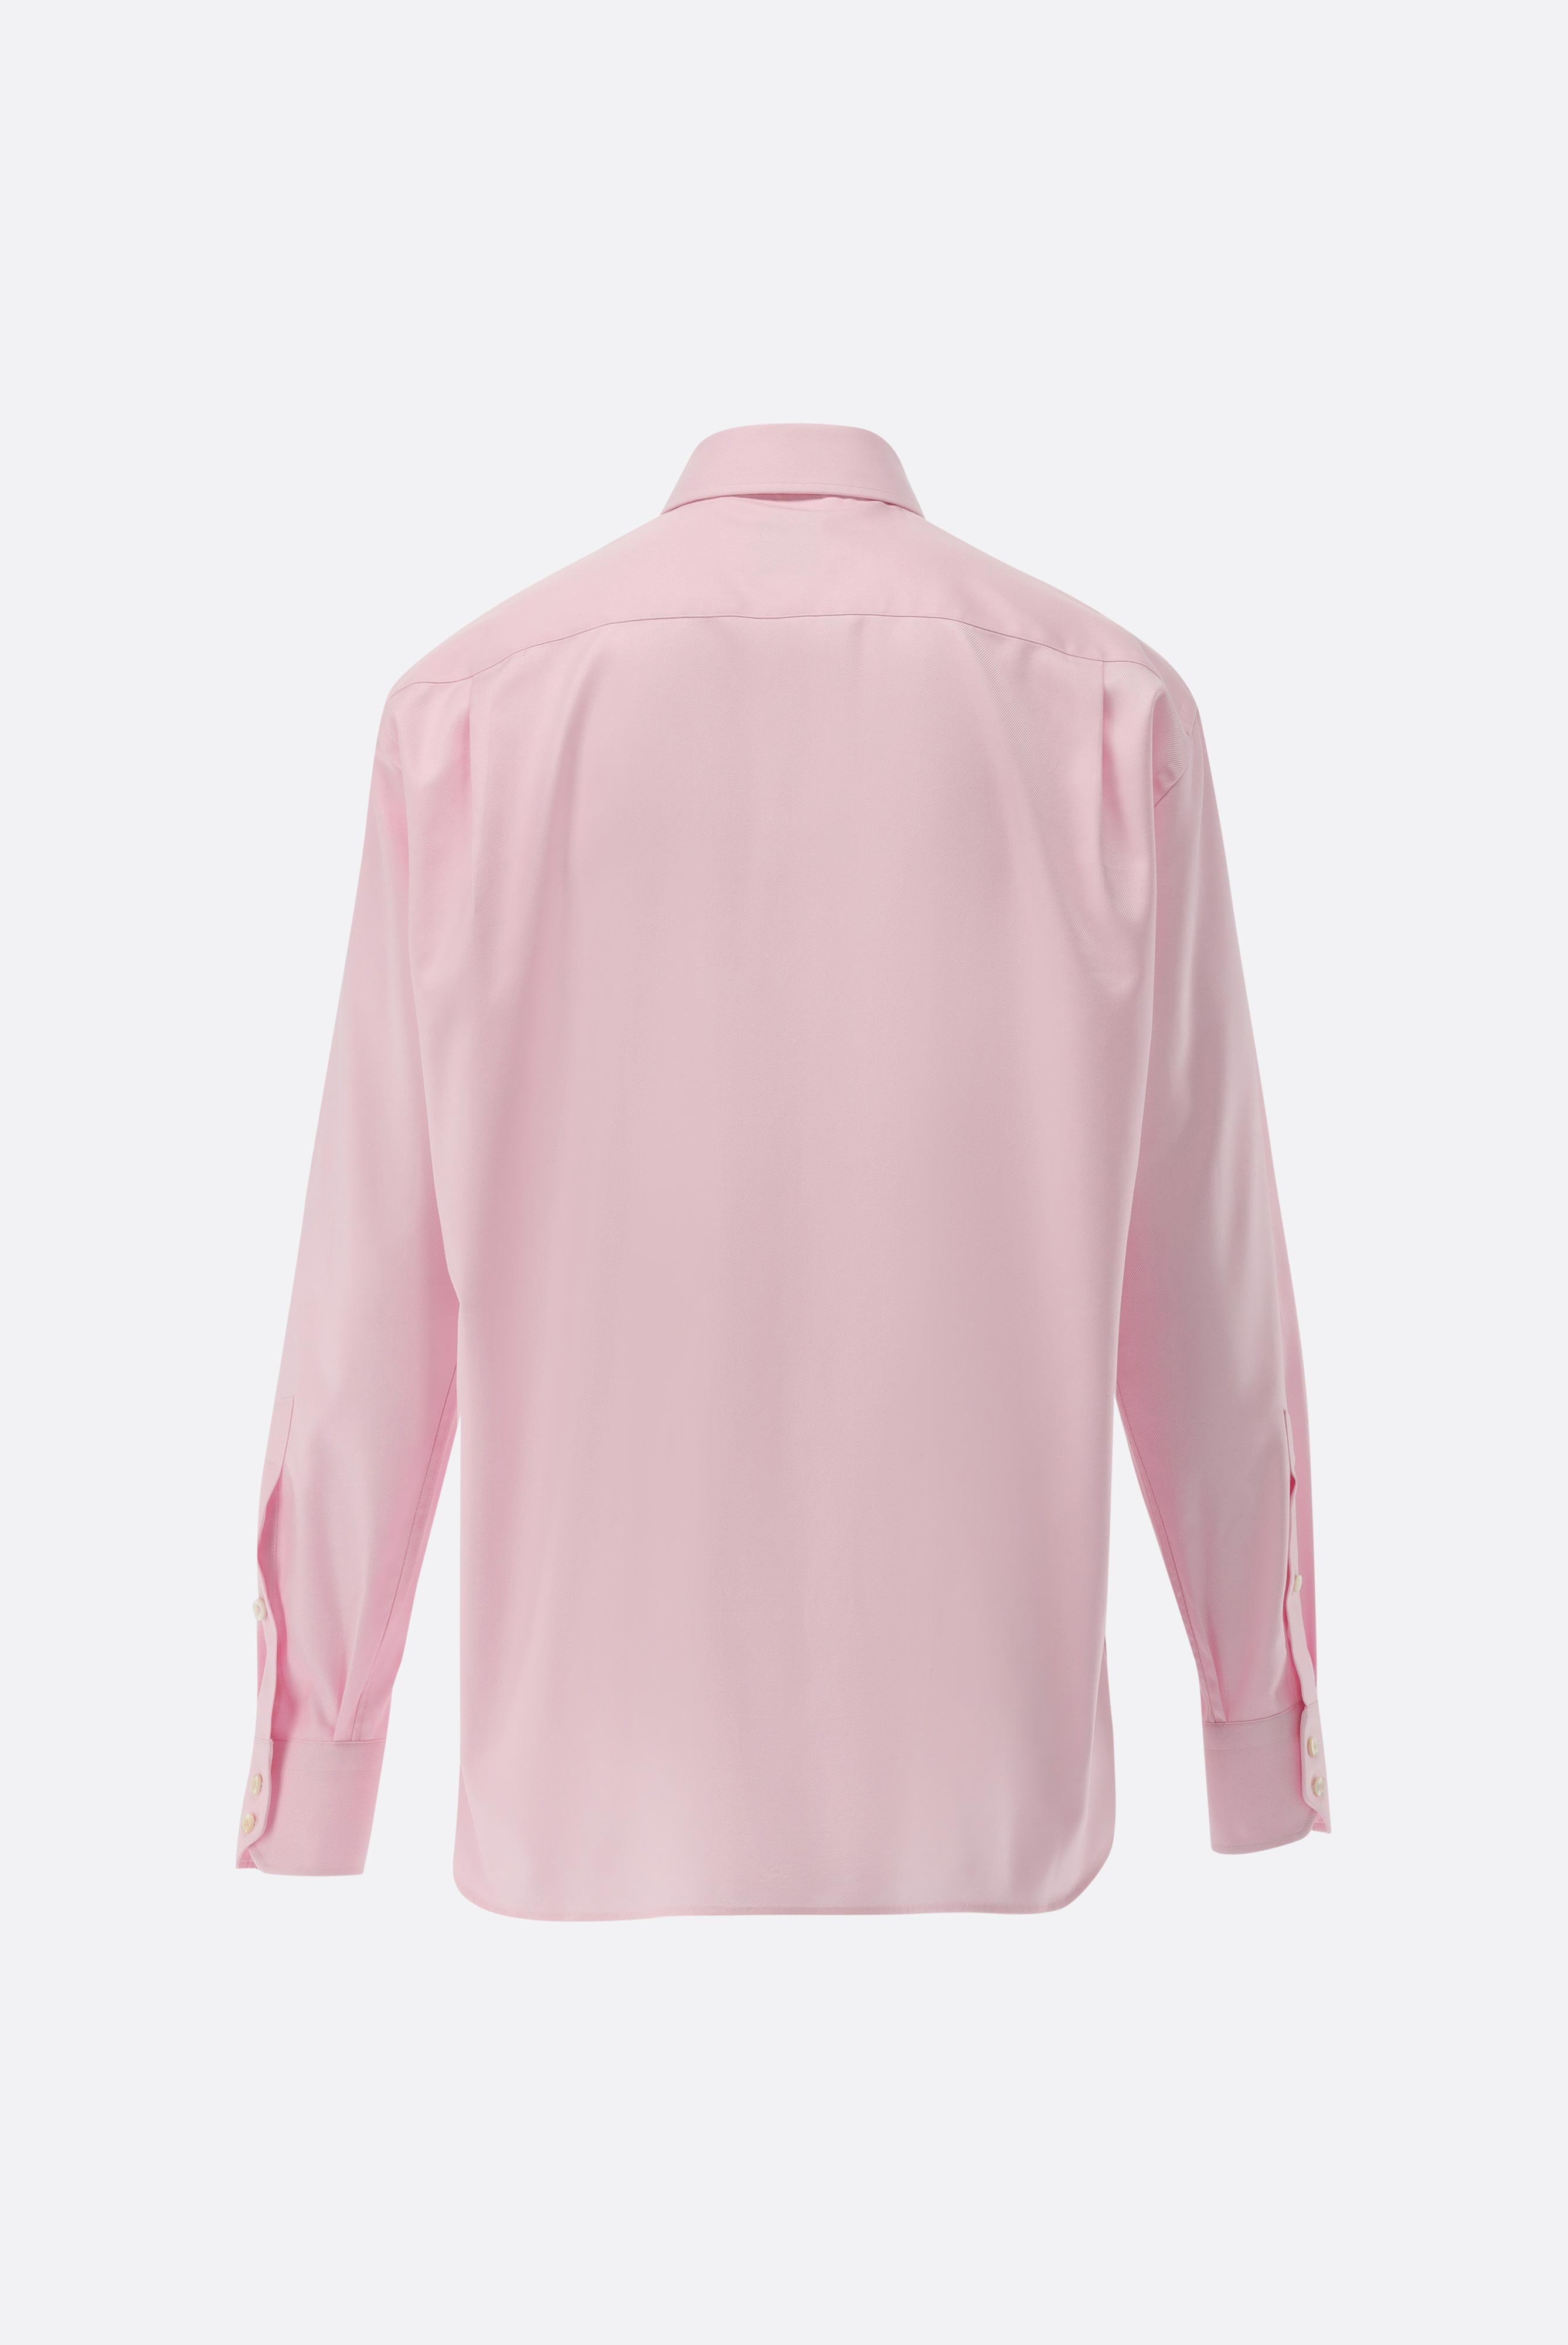 Comfort-Fit Hemden+Bügelfreies Businesshemd Comfort Fit+20.2021.BQ.150130.520.39